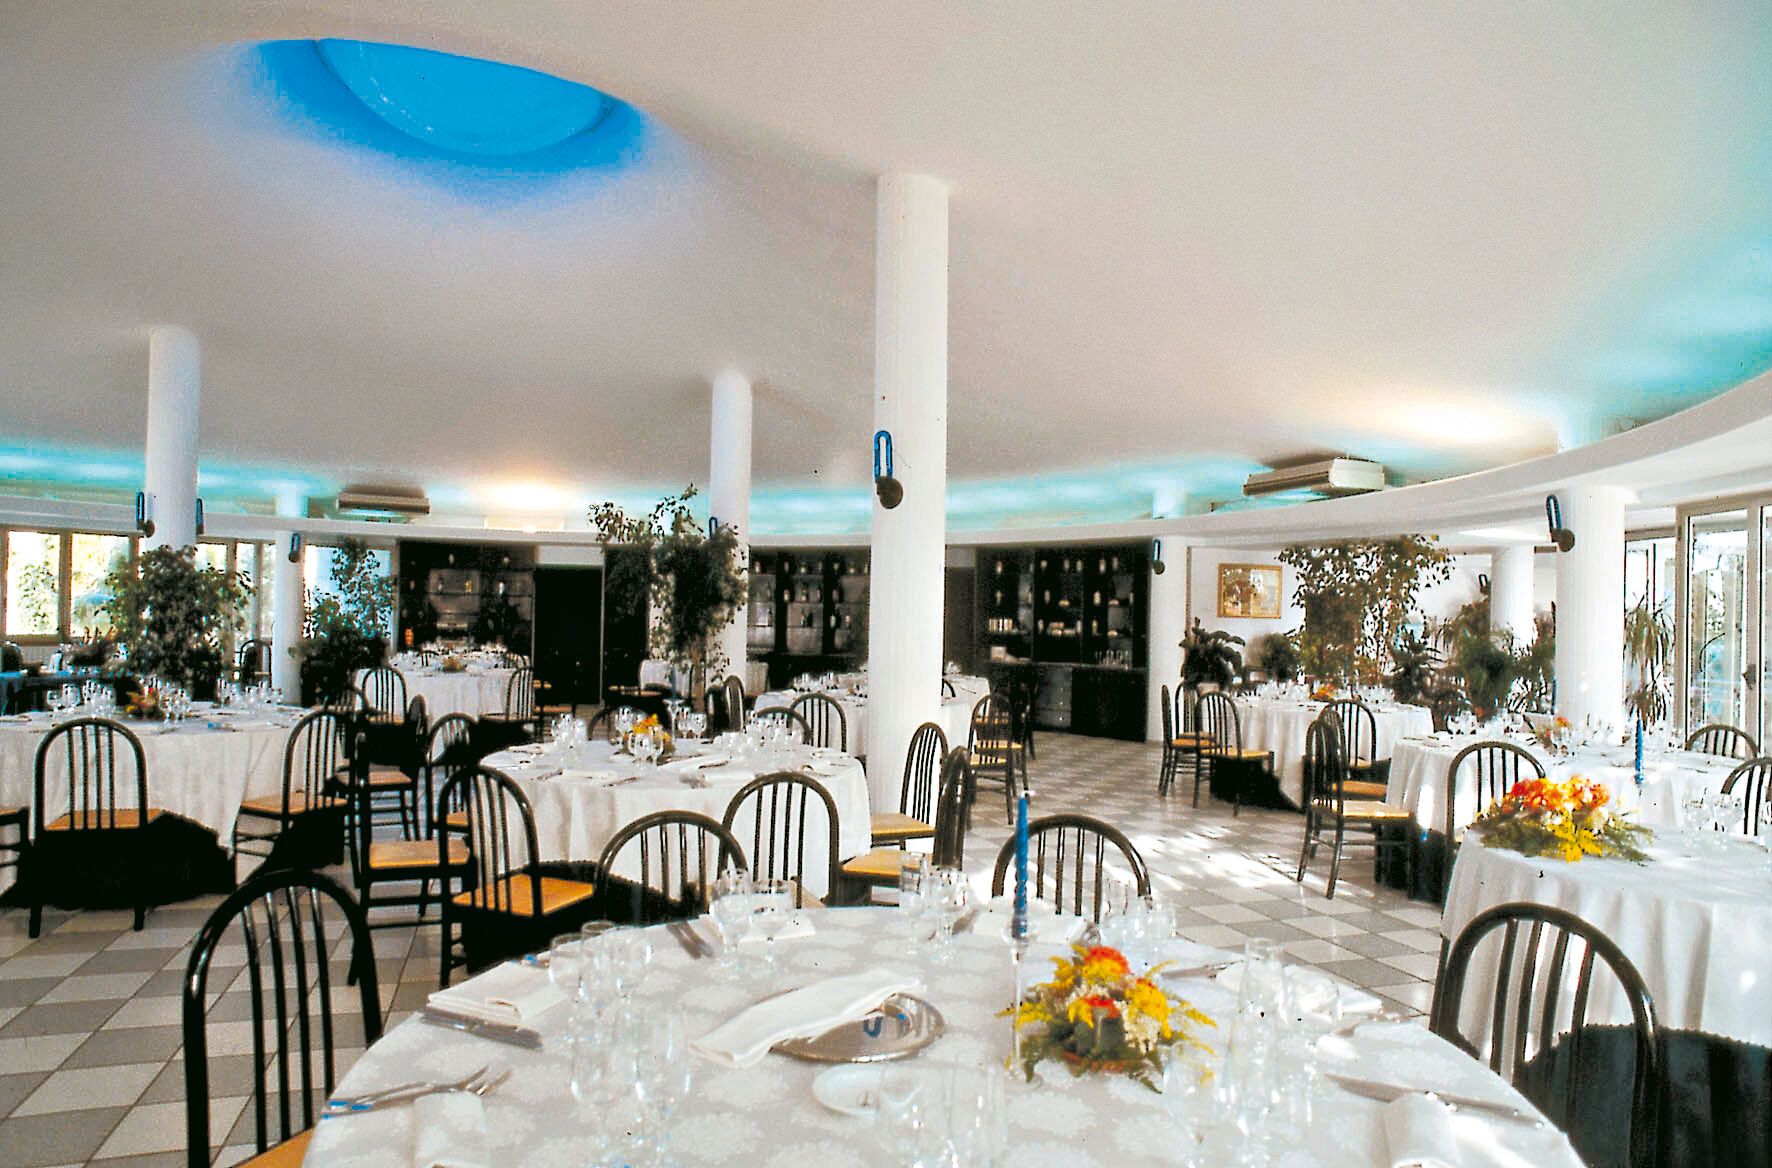 Italie - Calabre - Hôtel Stromboli 4*